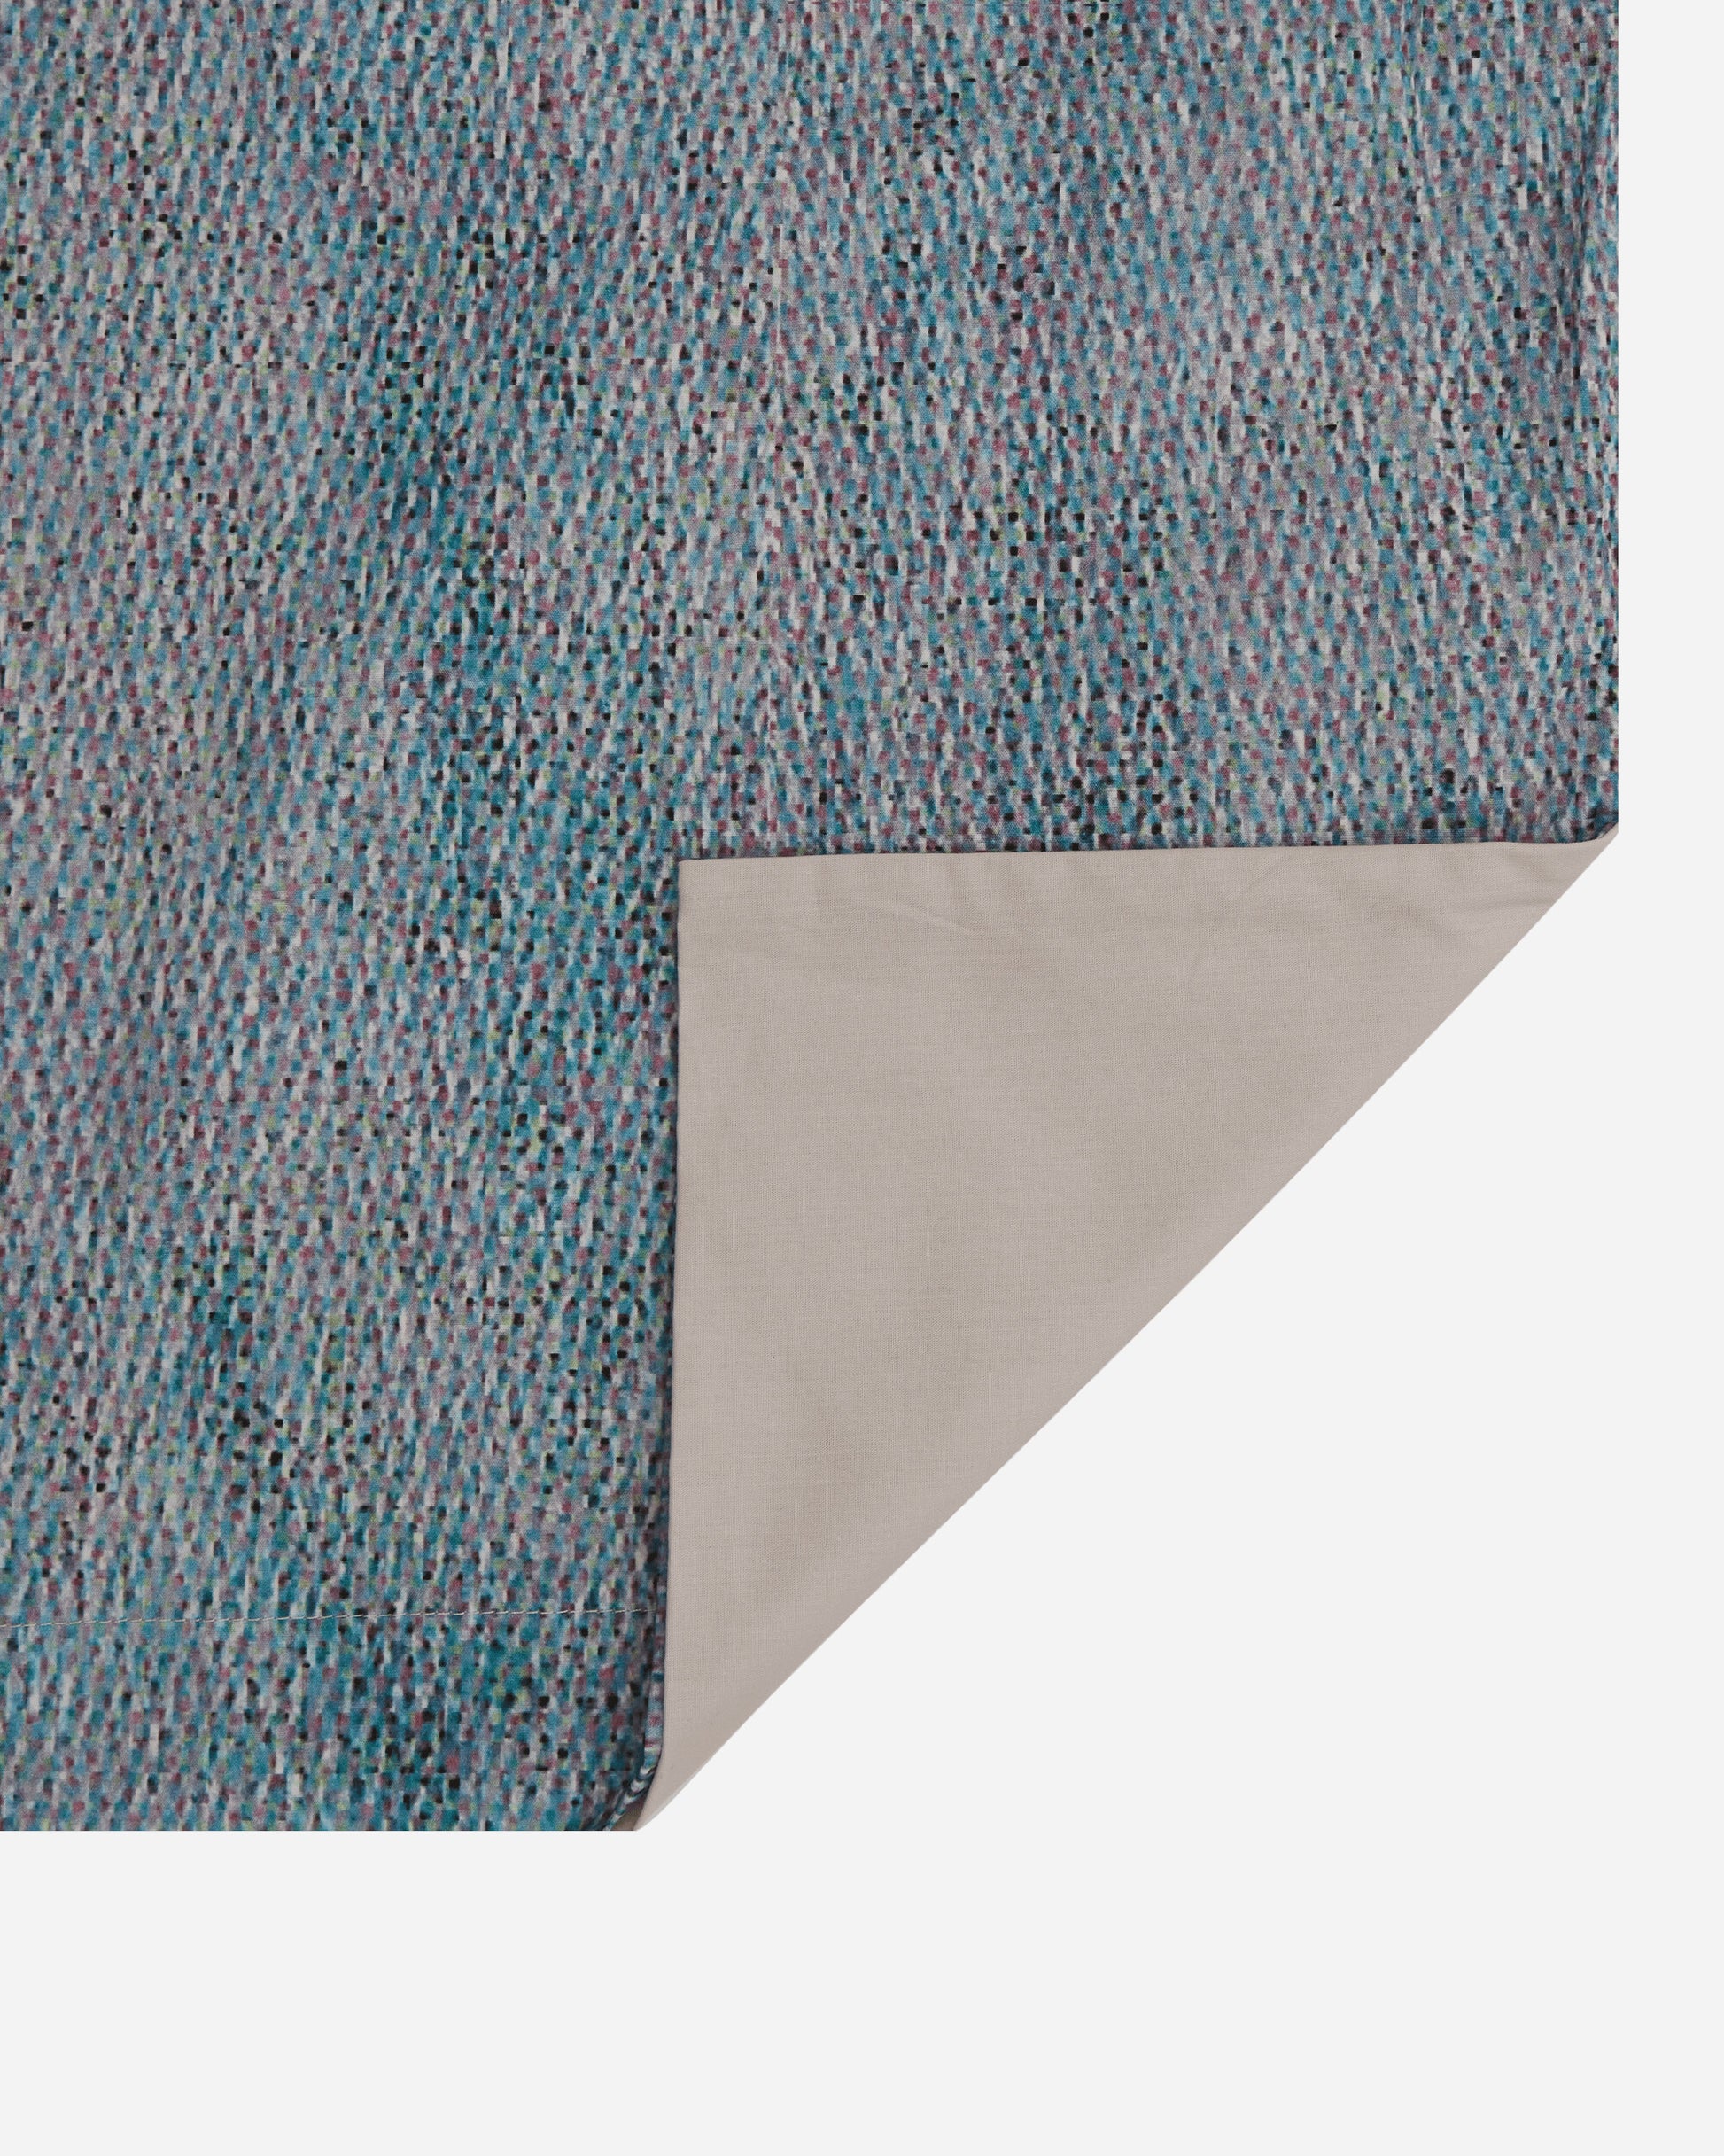 Serapis Flare Bed Sheet Multi Textile Bedding HW3-BED-1 001